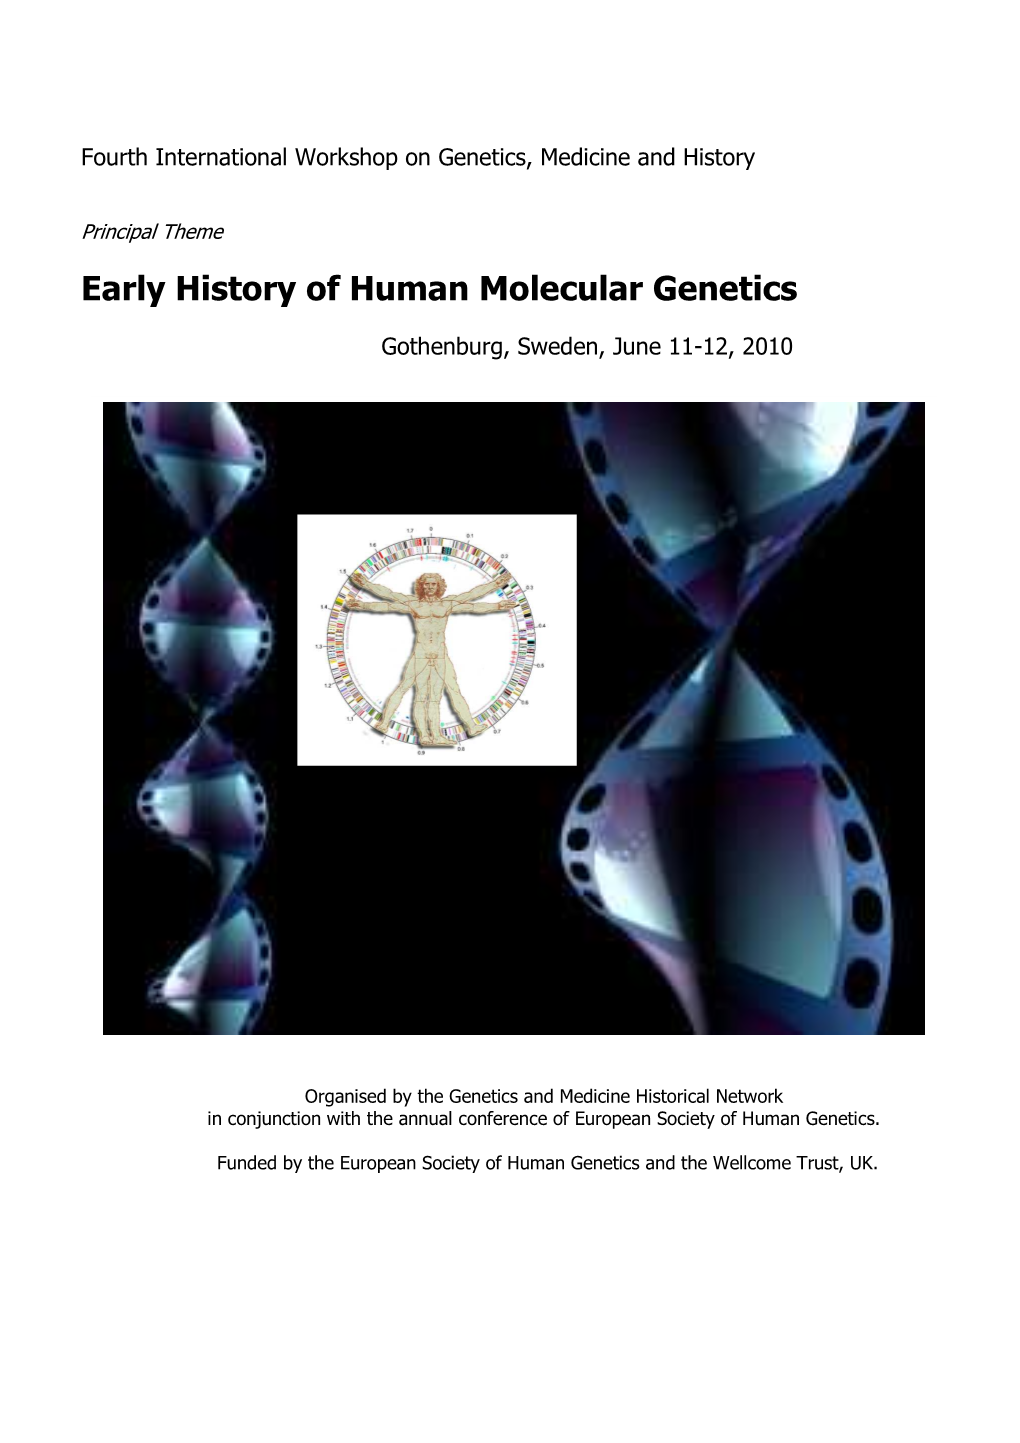 Early History of Human Molecular Genetics